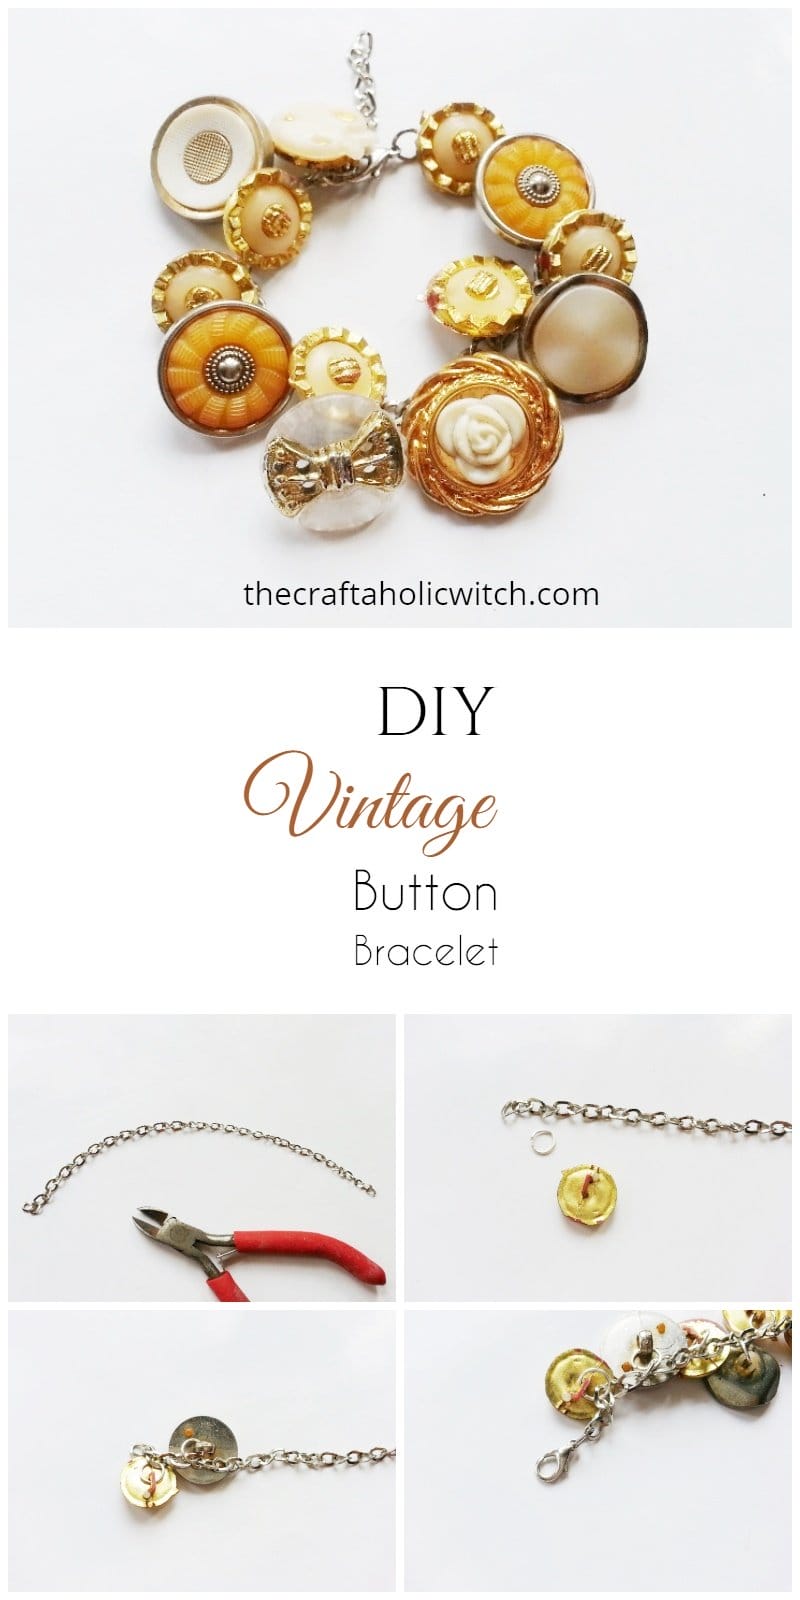 button bracelet pin image - DIY Vintage Button Bracelet